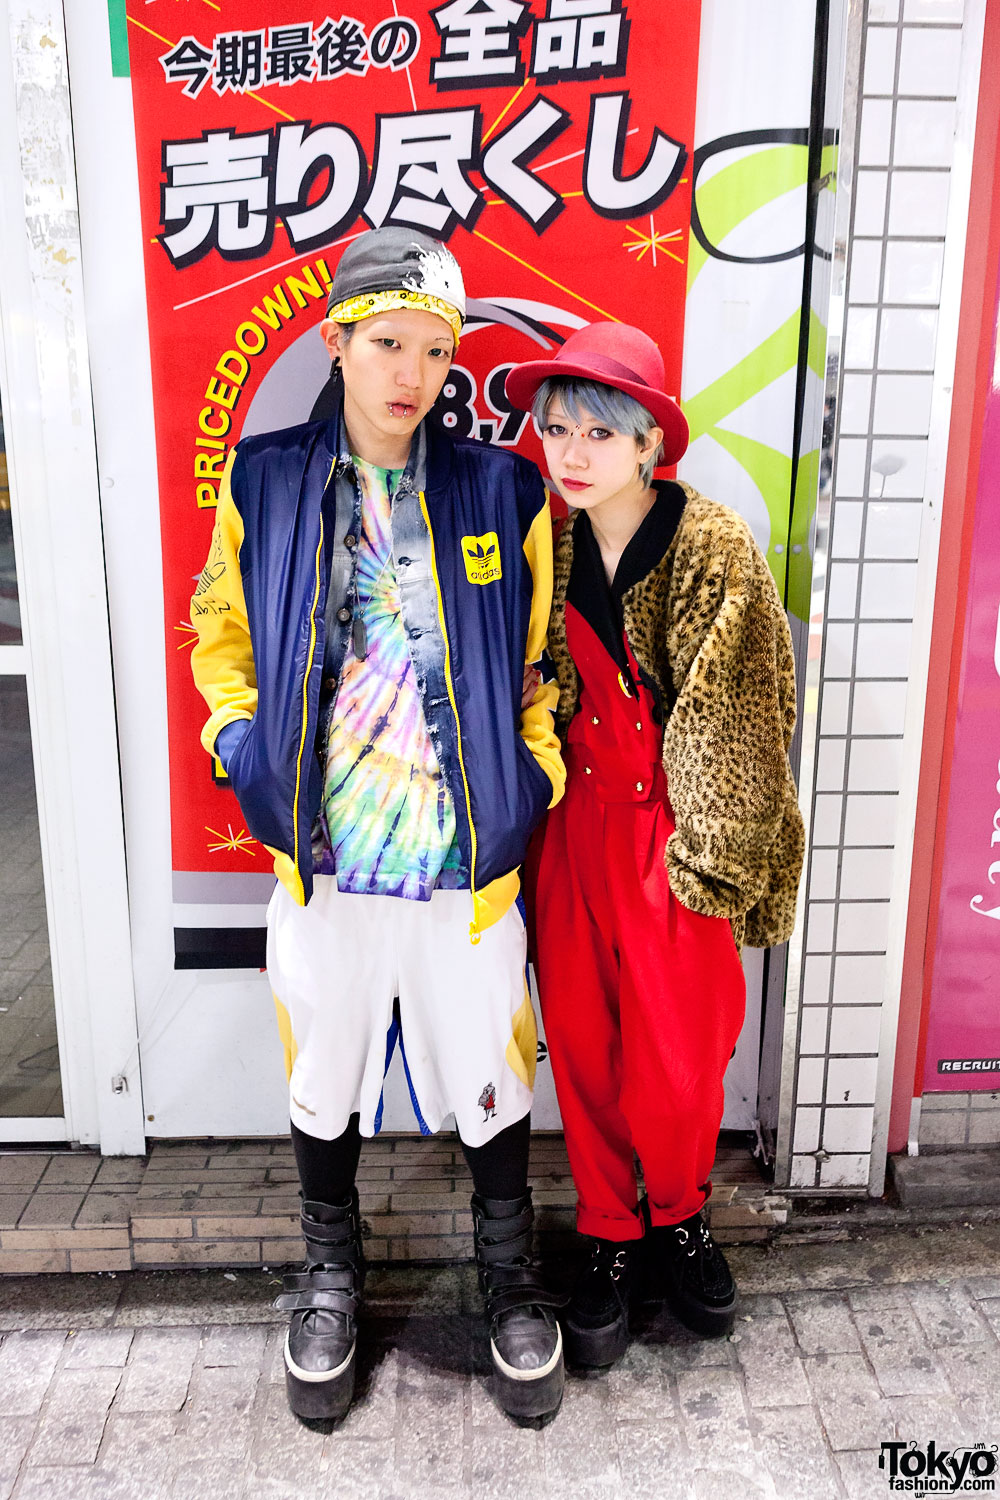 Ricky & Yui on the Street in Shibuya